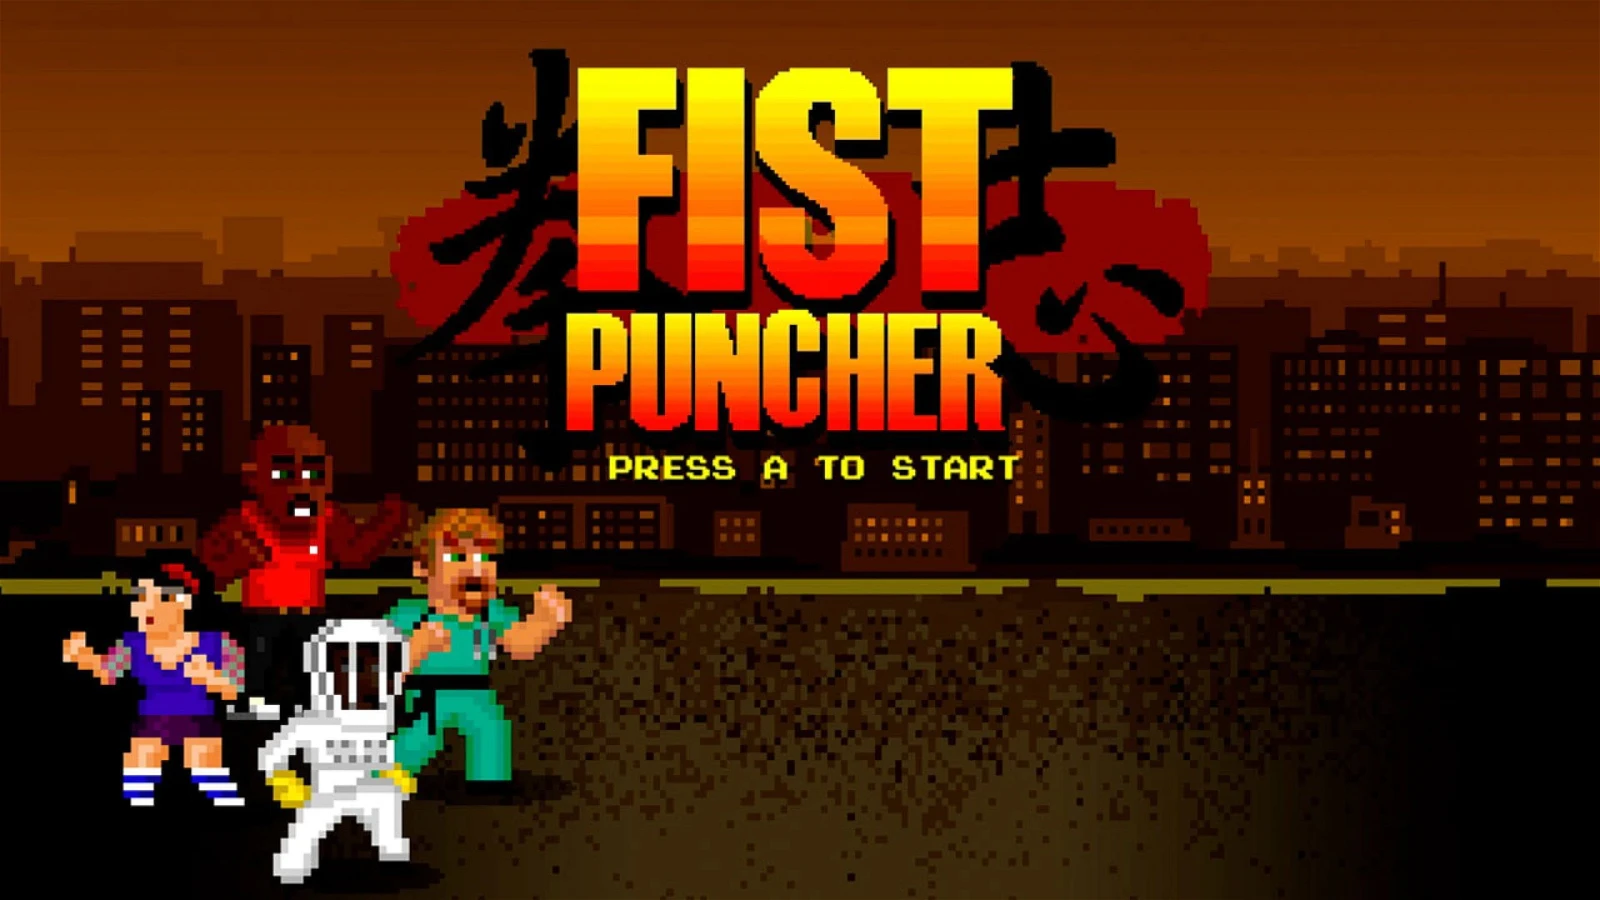 Warner Bros. also sent a delisting warning to the Fist Puncher developer